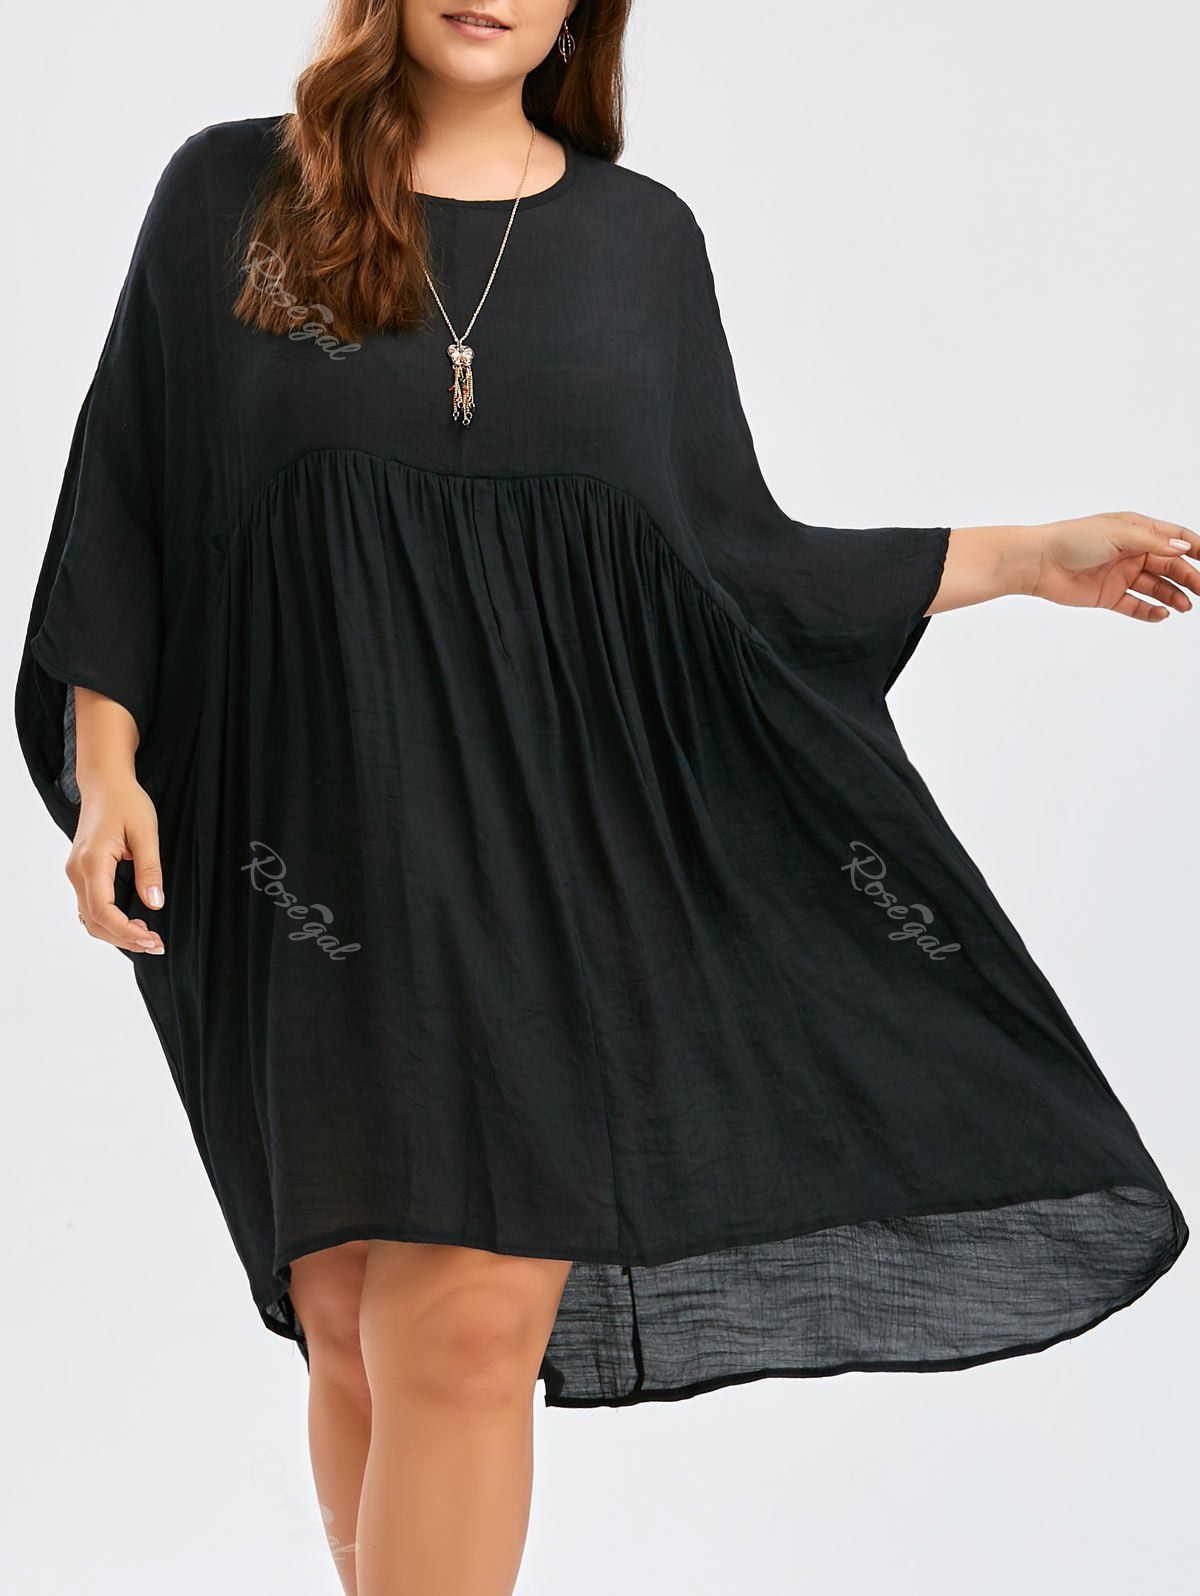 Buy > babydoll plus size dress > in stock